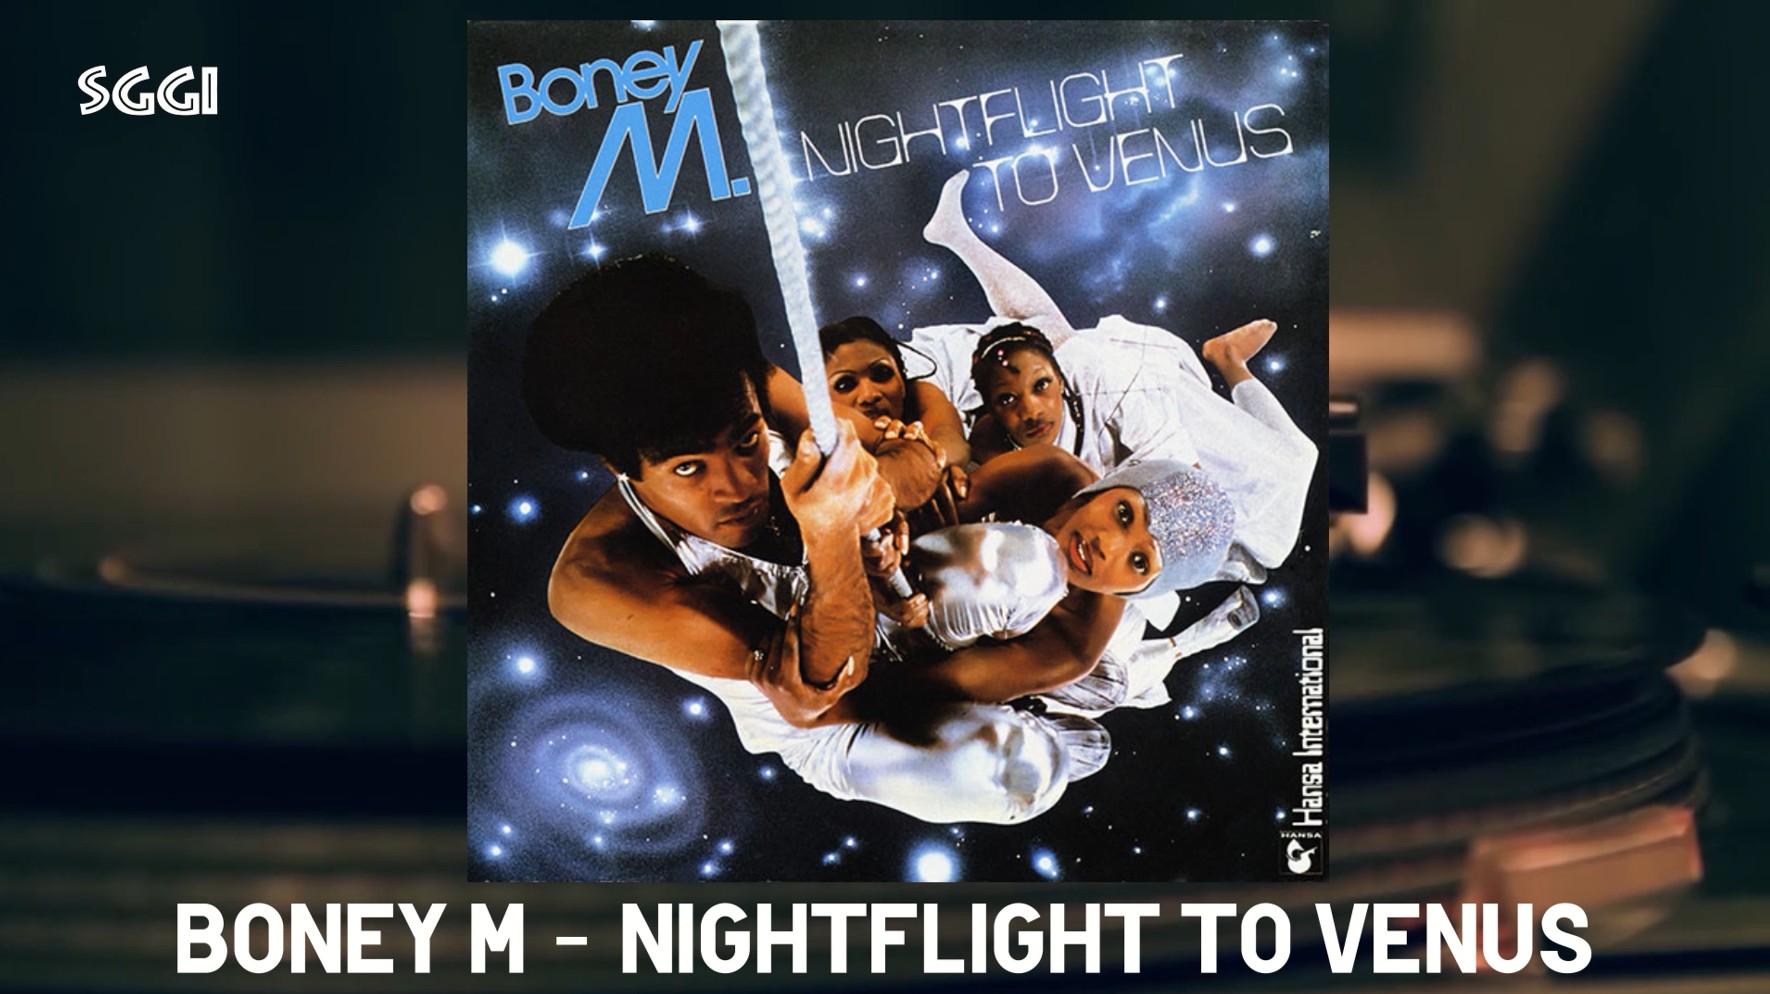 Boney m nightflight. Boney m Night Flight to Venus. Boney m Nightflight to Venus 1978. Boney m Nightflight to Venus плакаты. Boney m.Nightflight to Venus/фото.